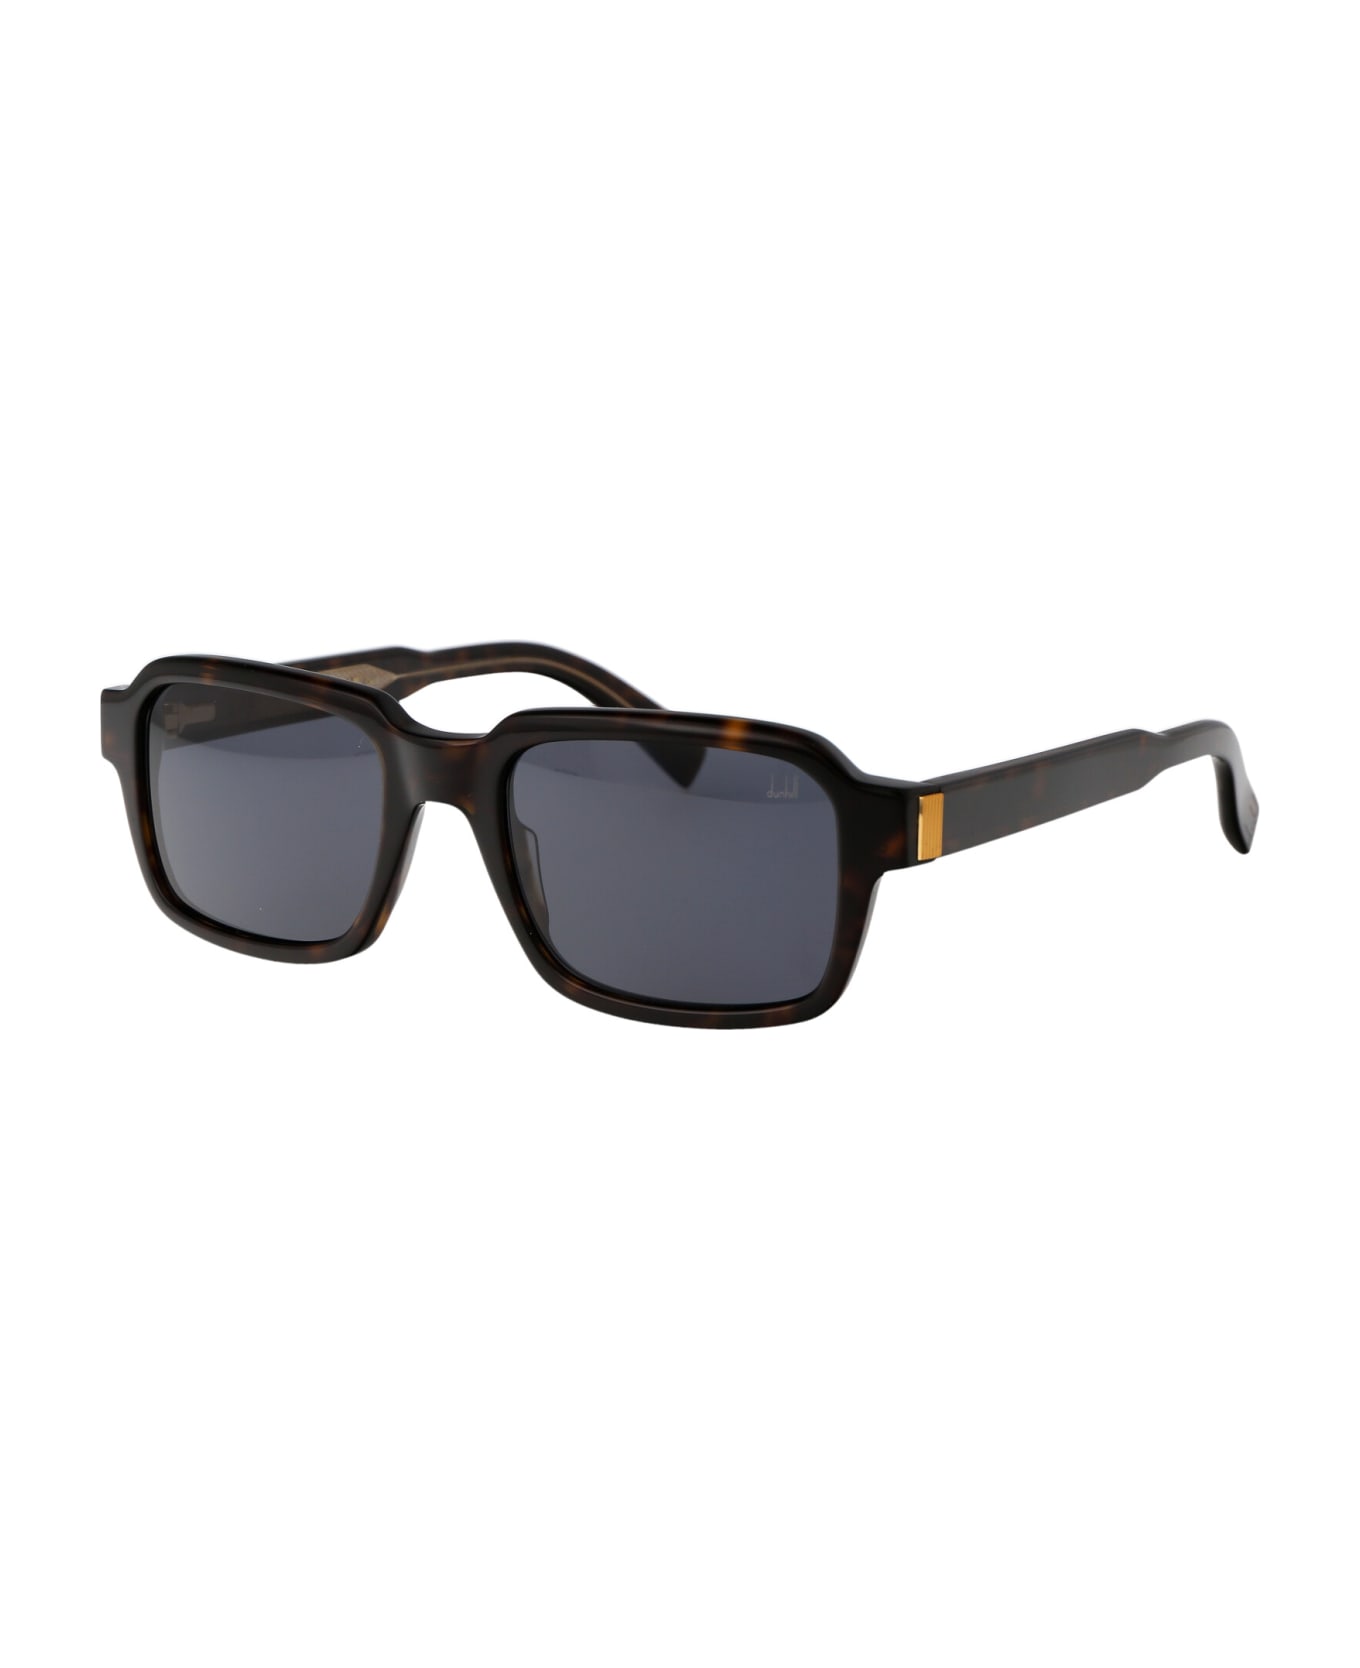 Dunhill Du0057s Sunglasses - 002 HAVANA HAVANA GREY サングラス